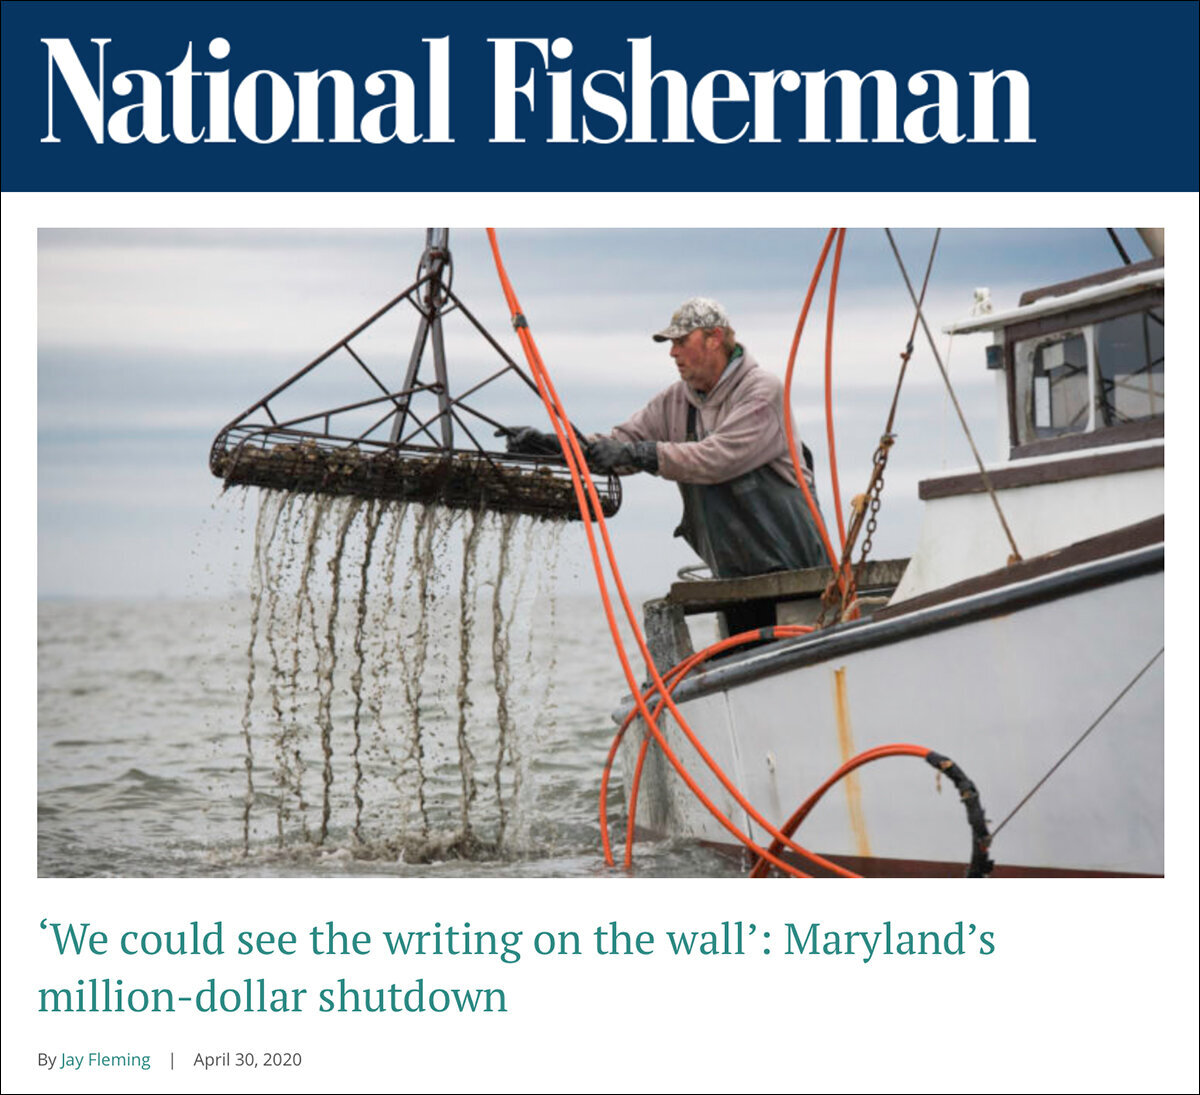 National+Fisherman+-+Maryland's+Million+Dollar+Shutdown.jpg